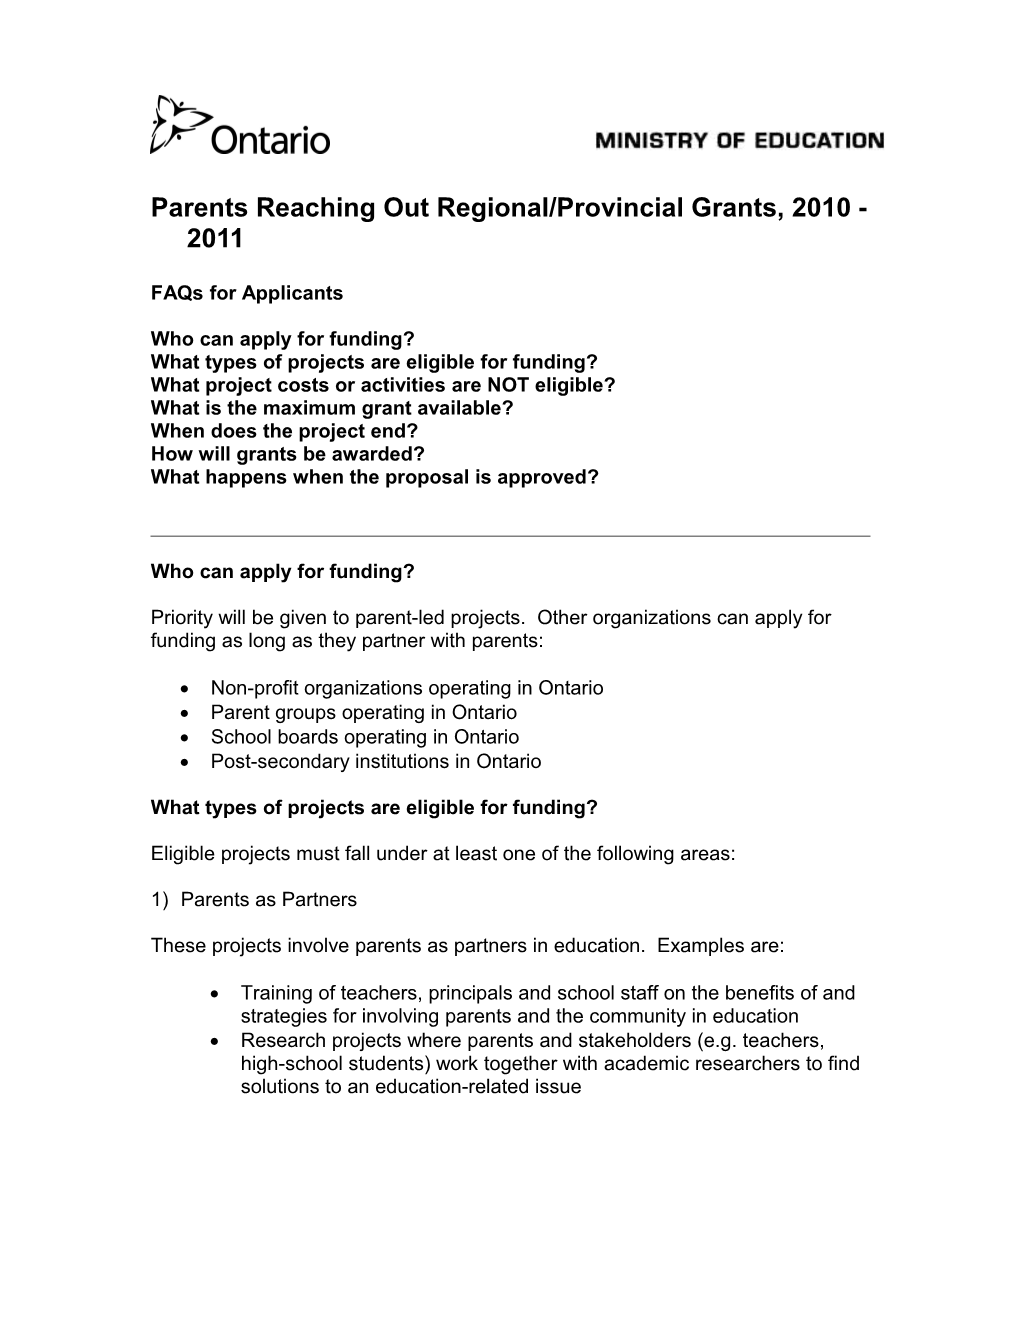 Parents Reaching Out Regional/Provincial Grants, 2007-2008